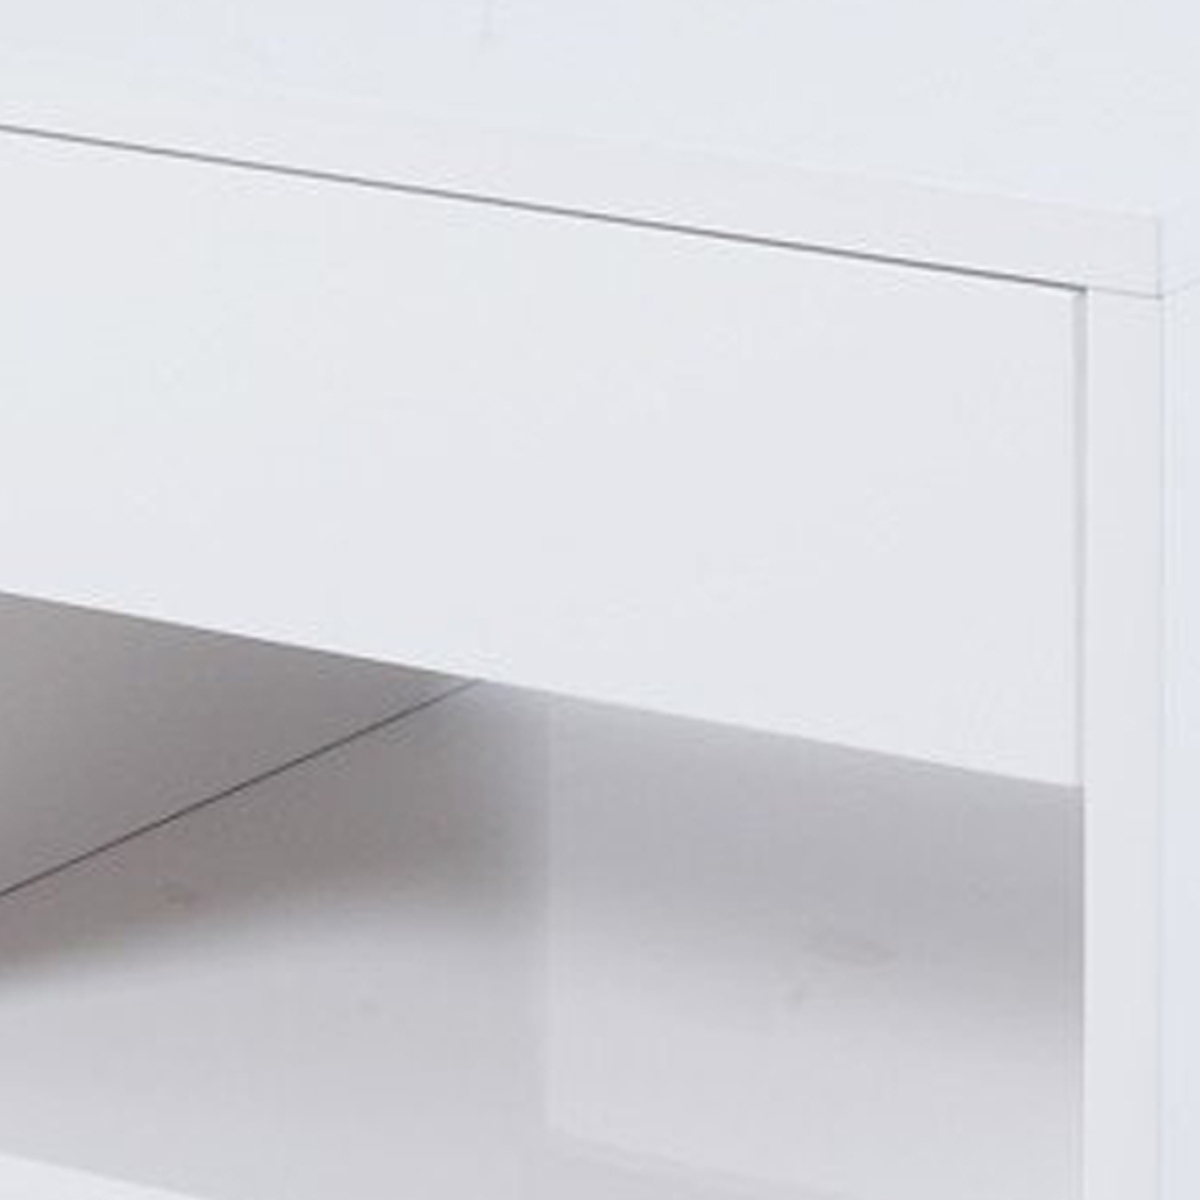 Contemporary Storage End Table With Metallic Base, Glossy White- Saltoro Sherpi